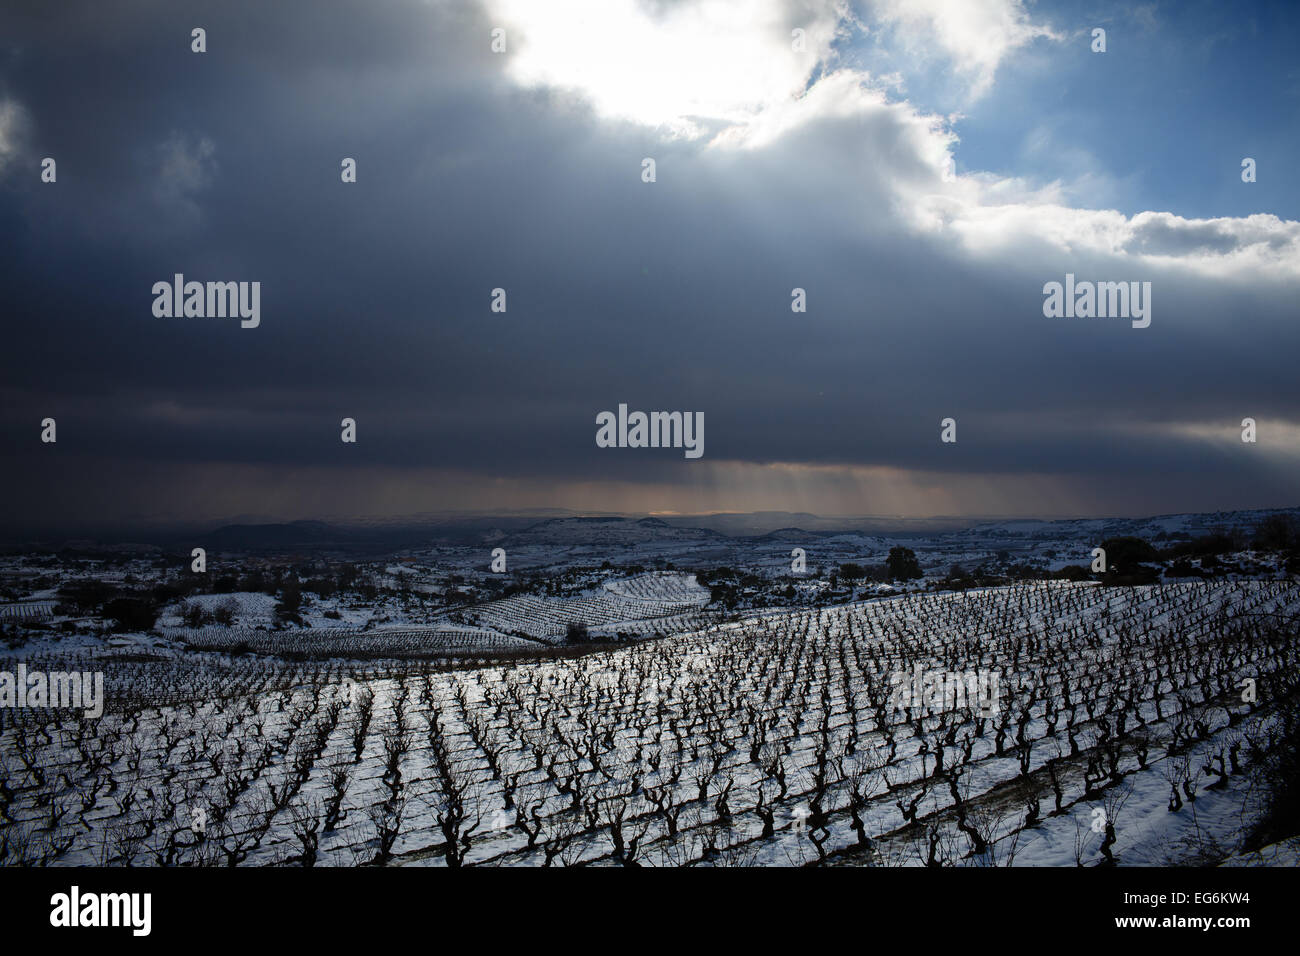 8/2/15 Snow-covered Rioja vineyards near Samaniego, Alava, Basque Country, Spain. Photo by James Sturcke. Stock Photo